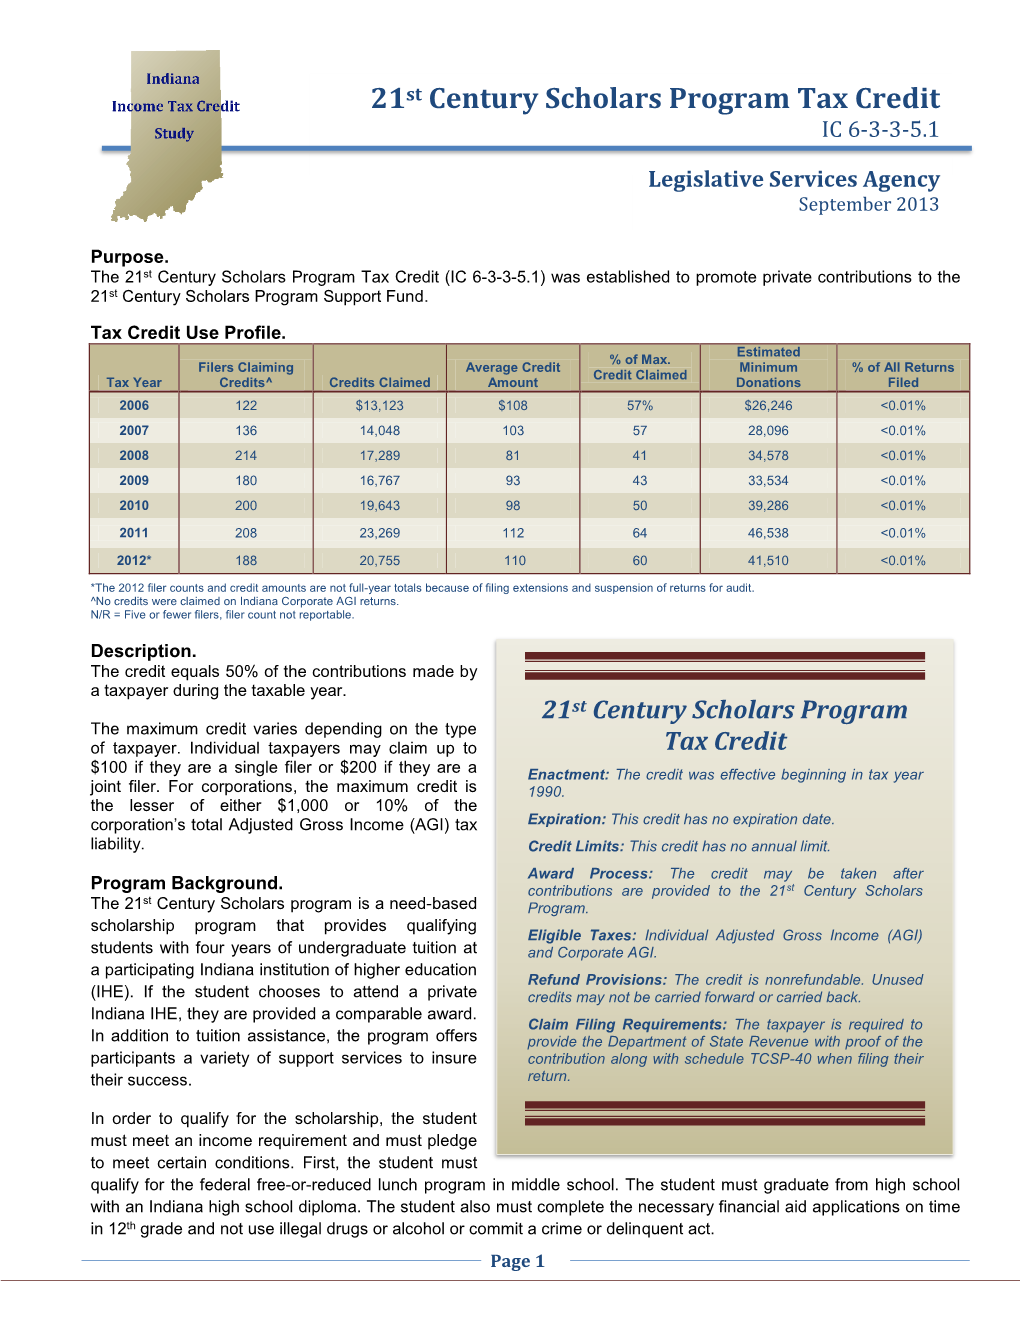 Ethanol Production Tax Credit IC 6-3.1-28